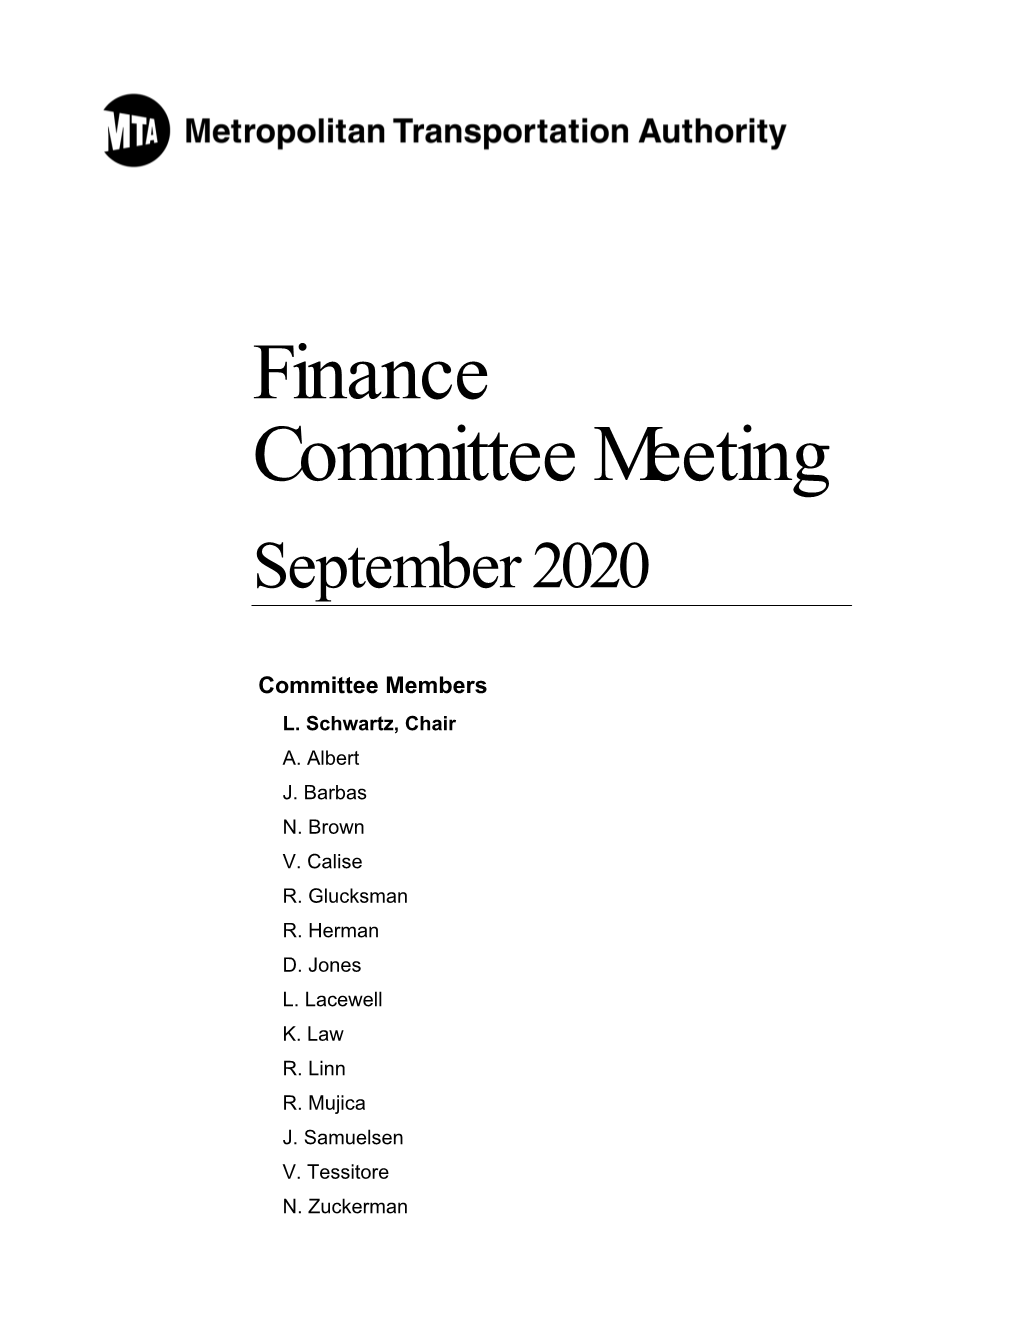 Finance Committee Meeting September 2020